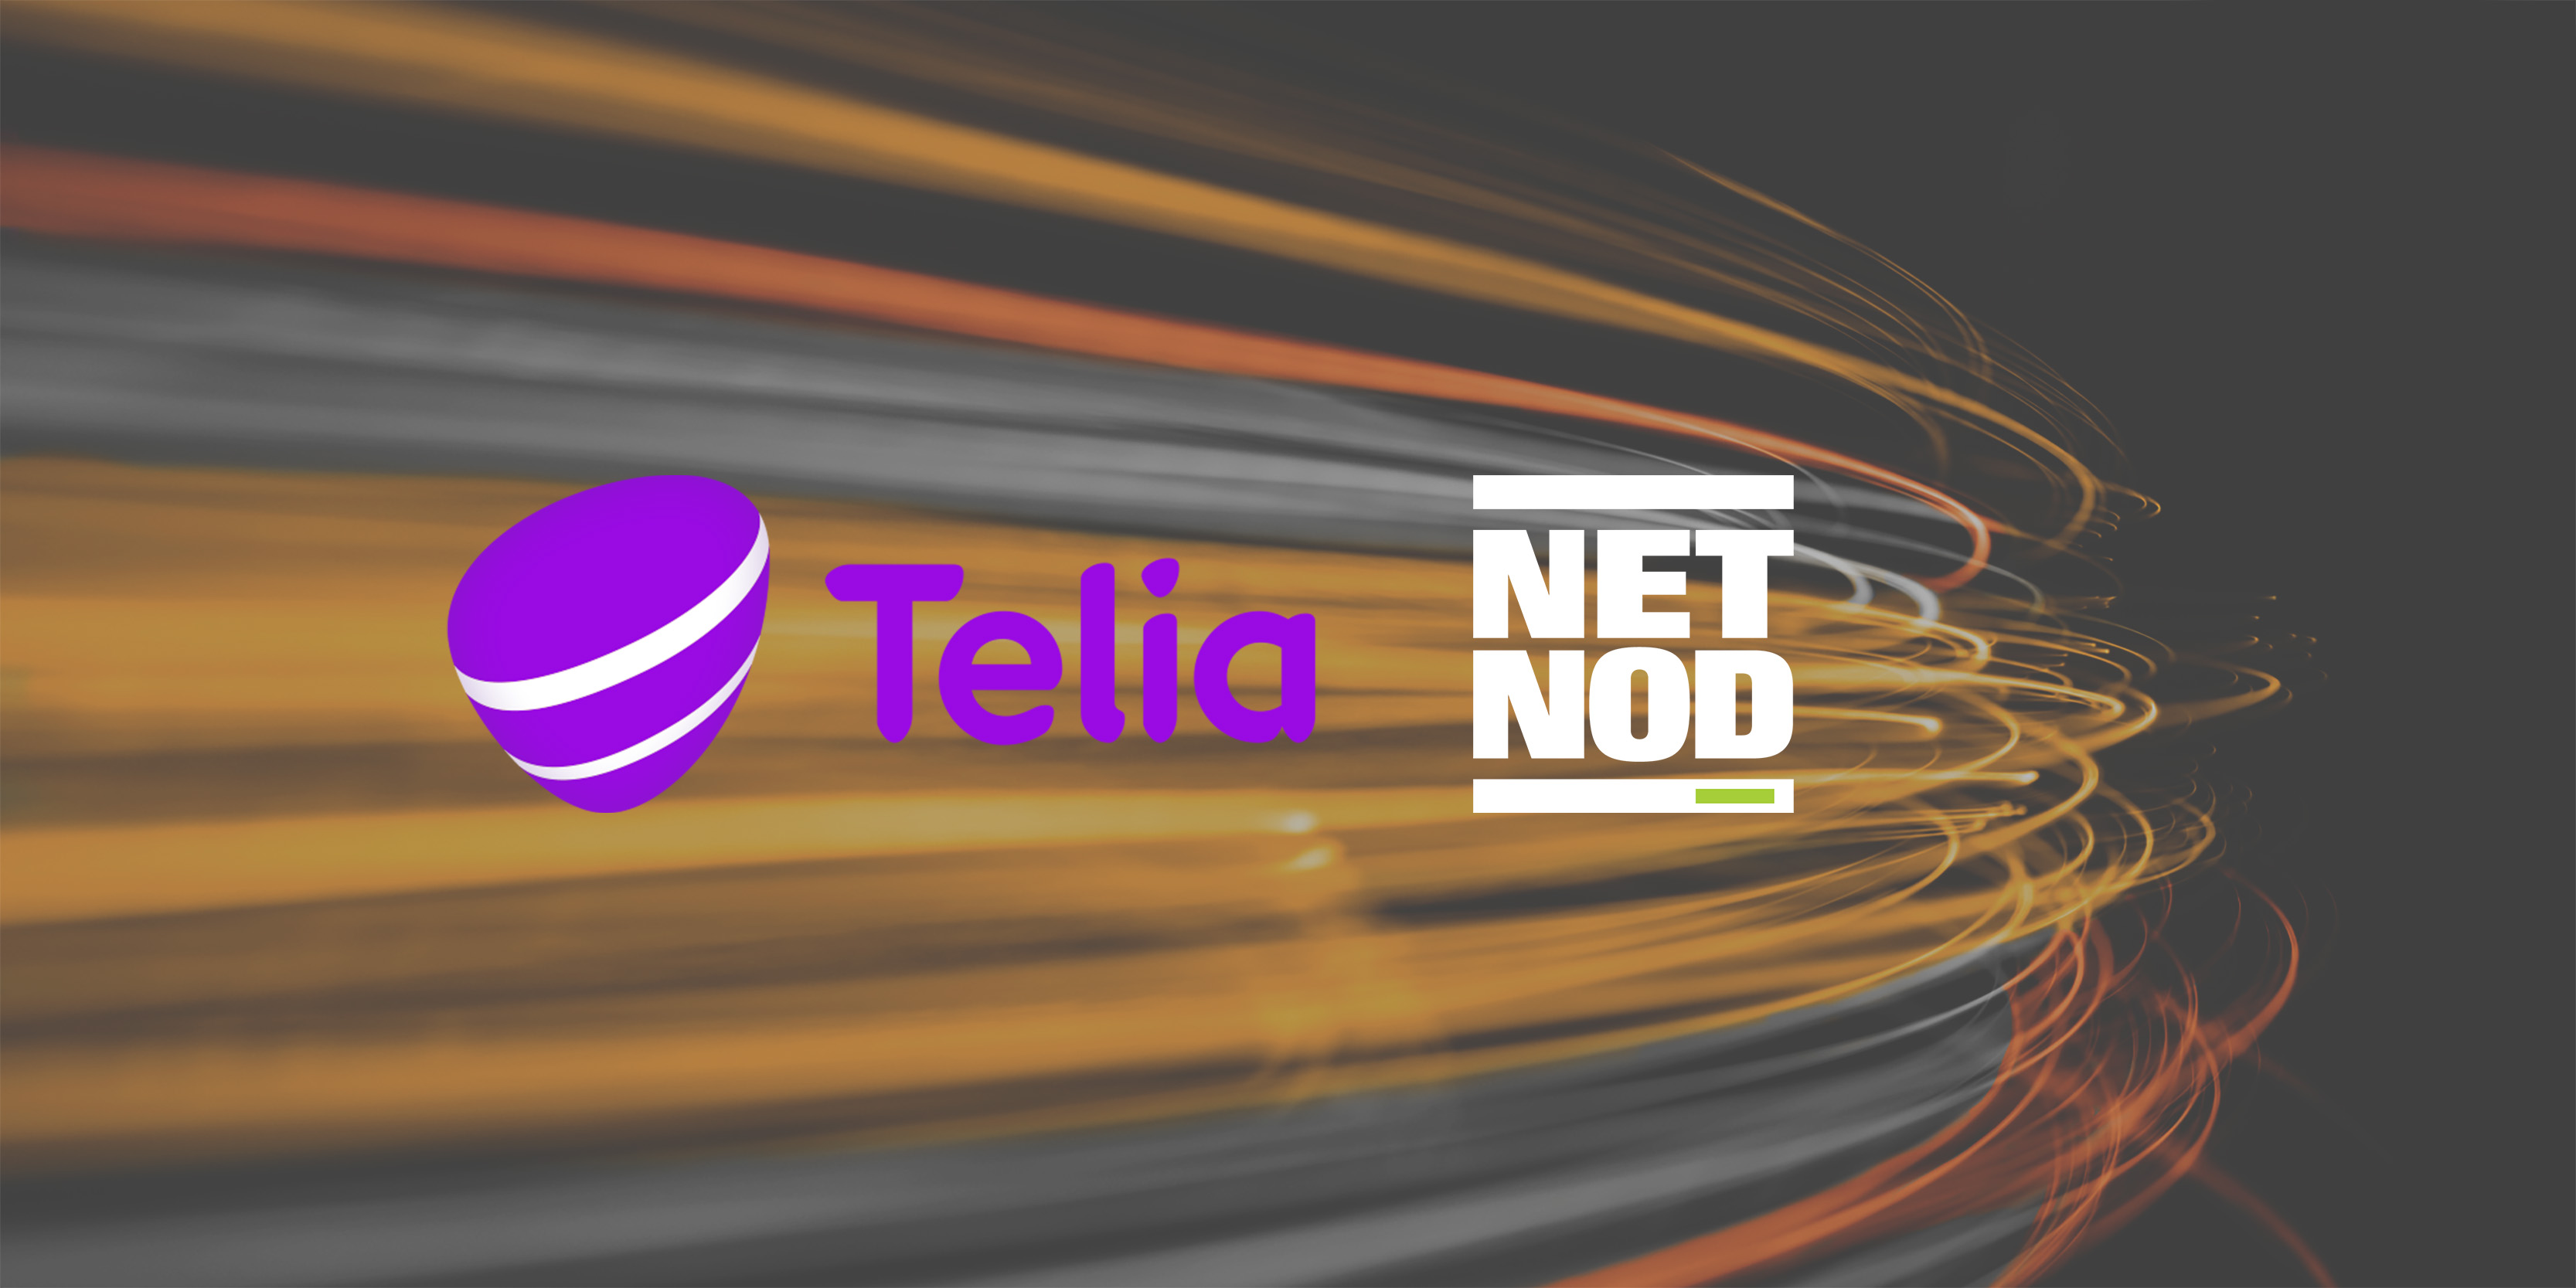 Telia Finland & Netnod